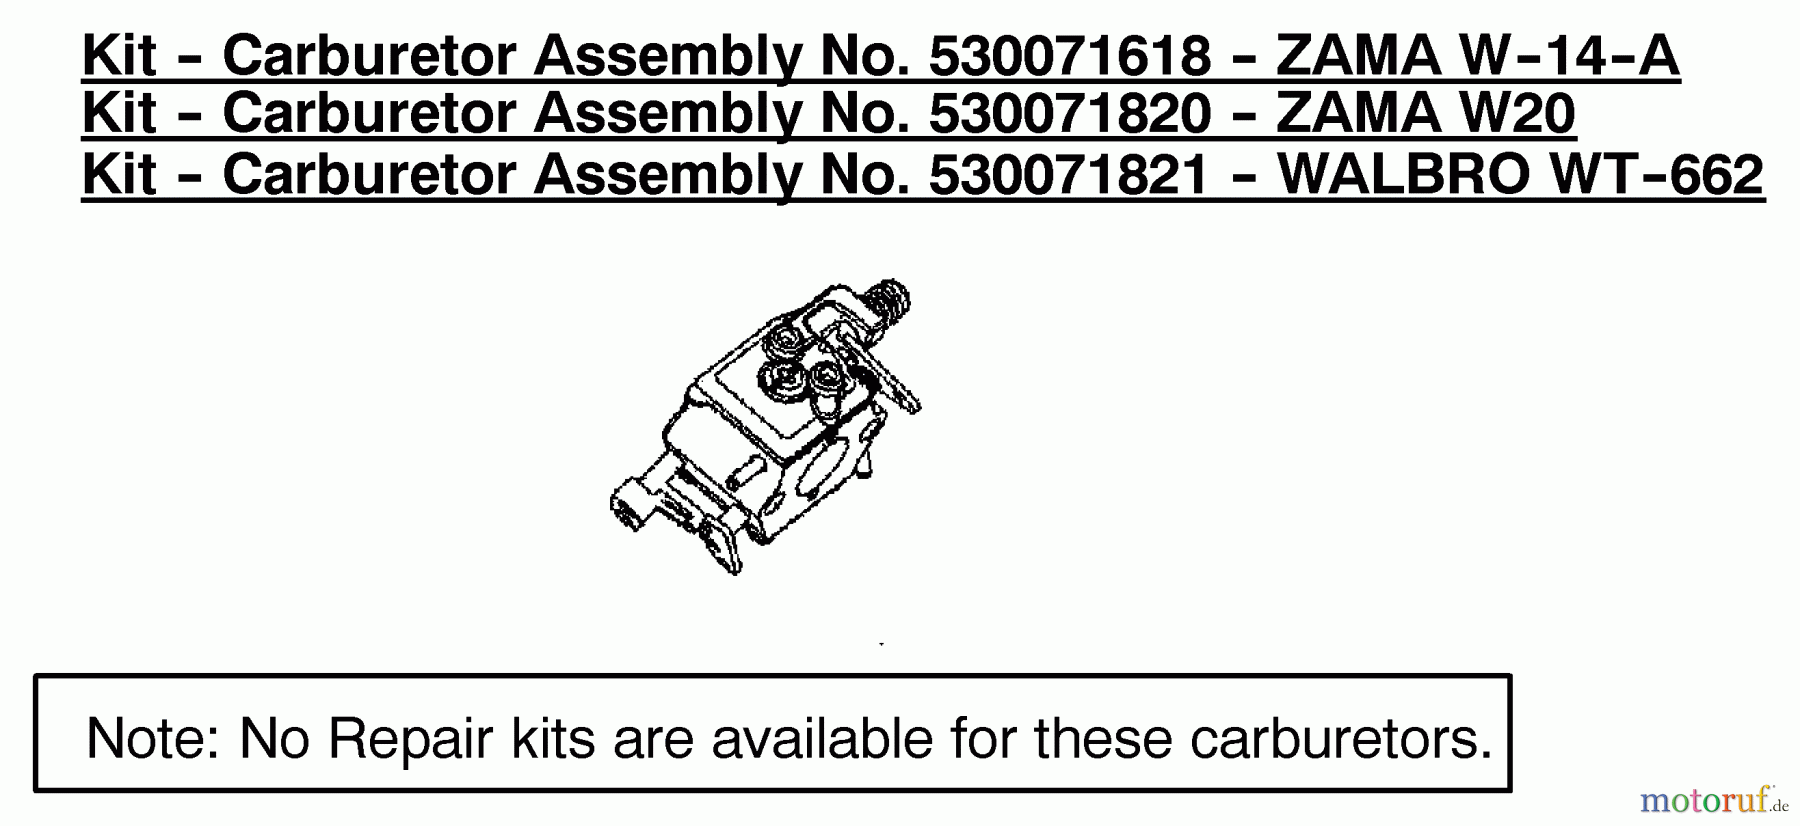  Poulan / Weed Eater Motorsägen 1975 (Type 7) - Poulan Woodshark Chainsaw Carburetor Assembly (Walbro WT-662) P/N 530071821